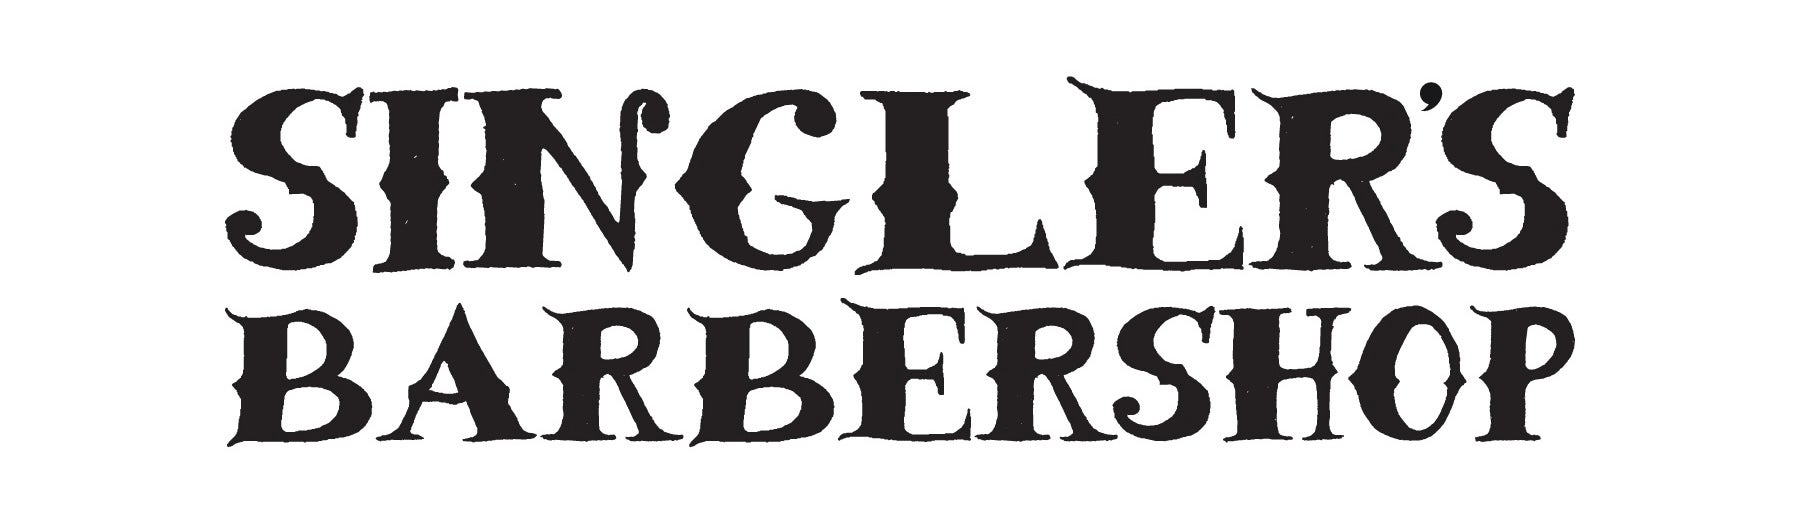 Appointments | Singler’s Barbershop